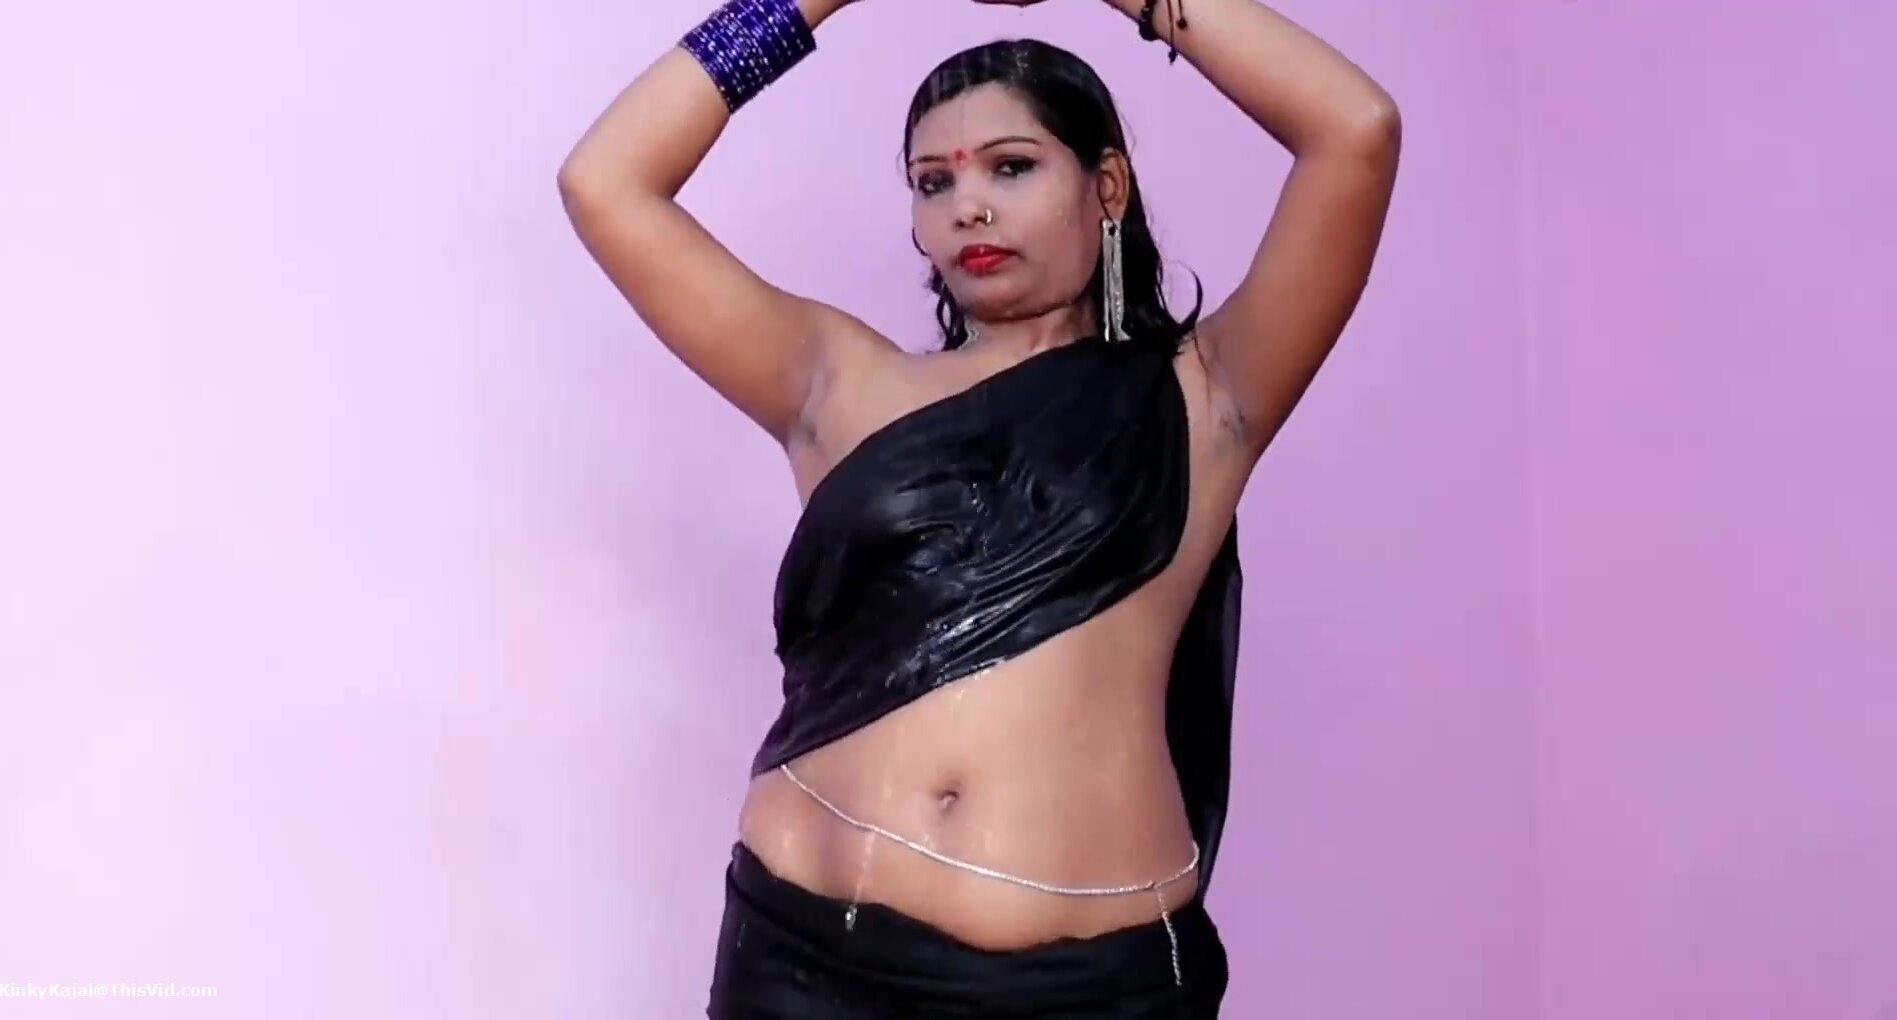 Bathroom Saree Sex Videos - Sexy Indian lady Full Nude Bathing in Black Saree - ThisVid.com